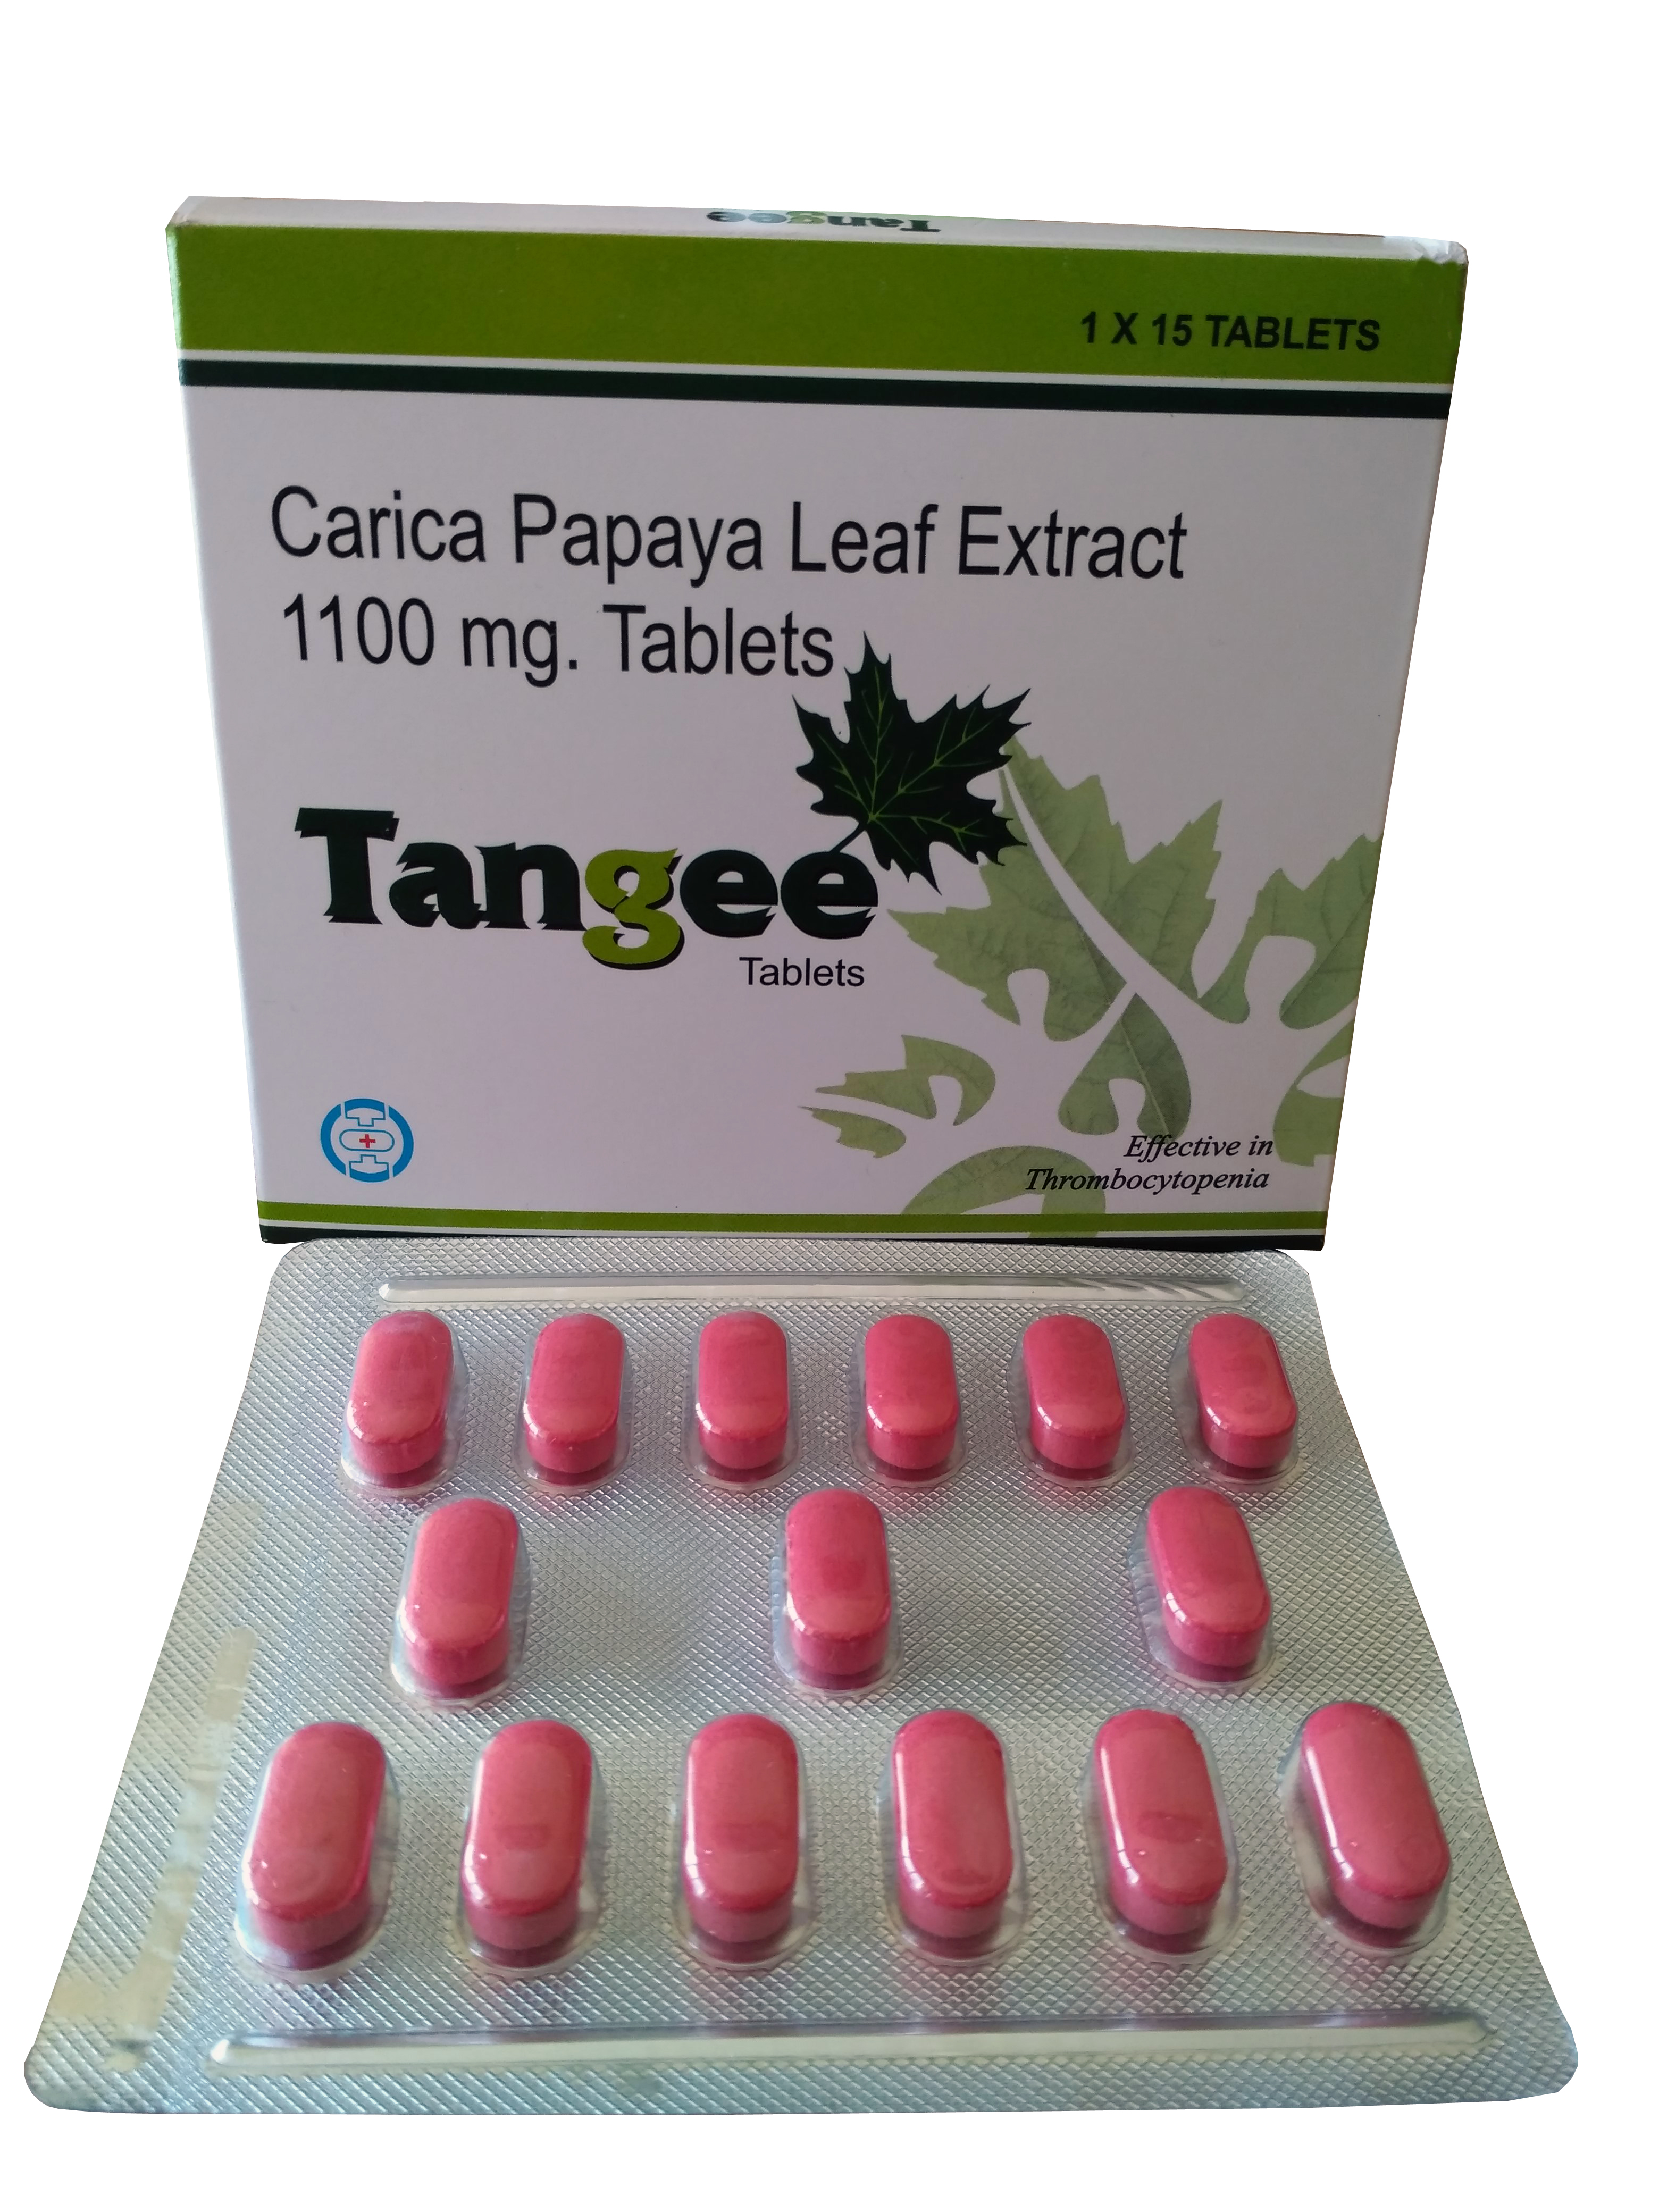 Carica Papaya Leaf Extract 1100mg